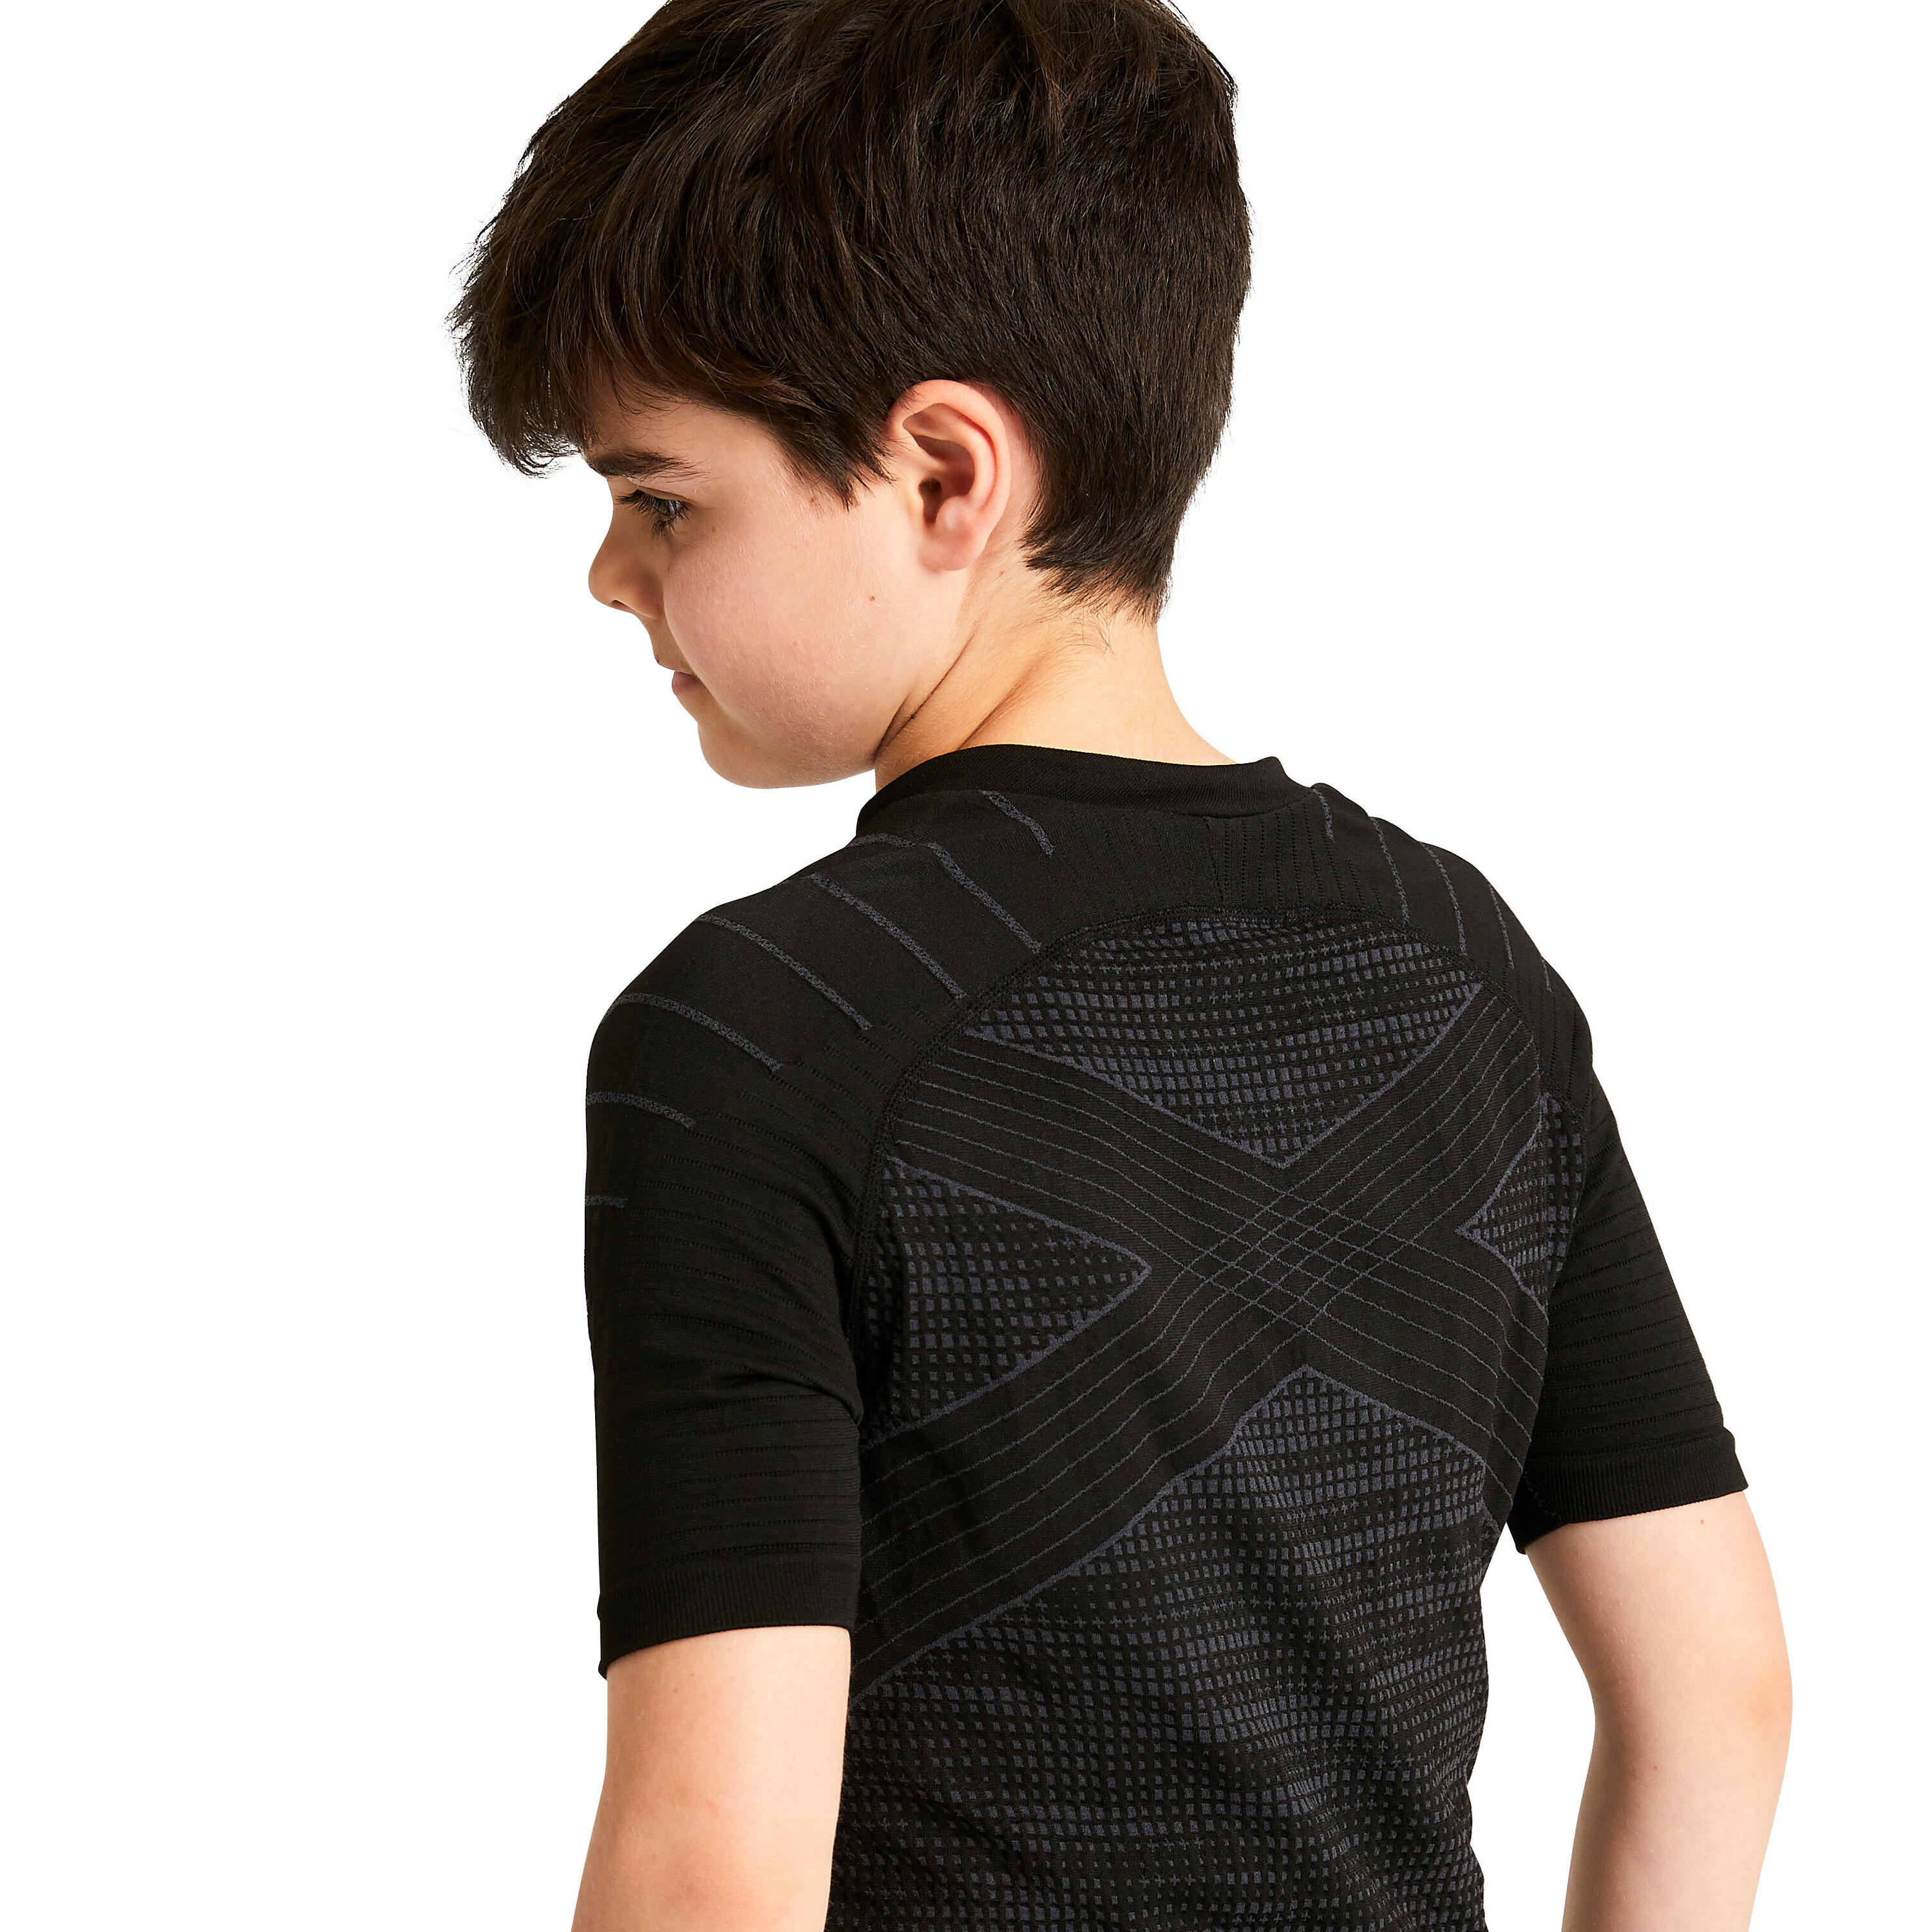 Kids' Short-Sleeved Thermal Base Layer Top Keepdry 500 - Black 8/10